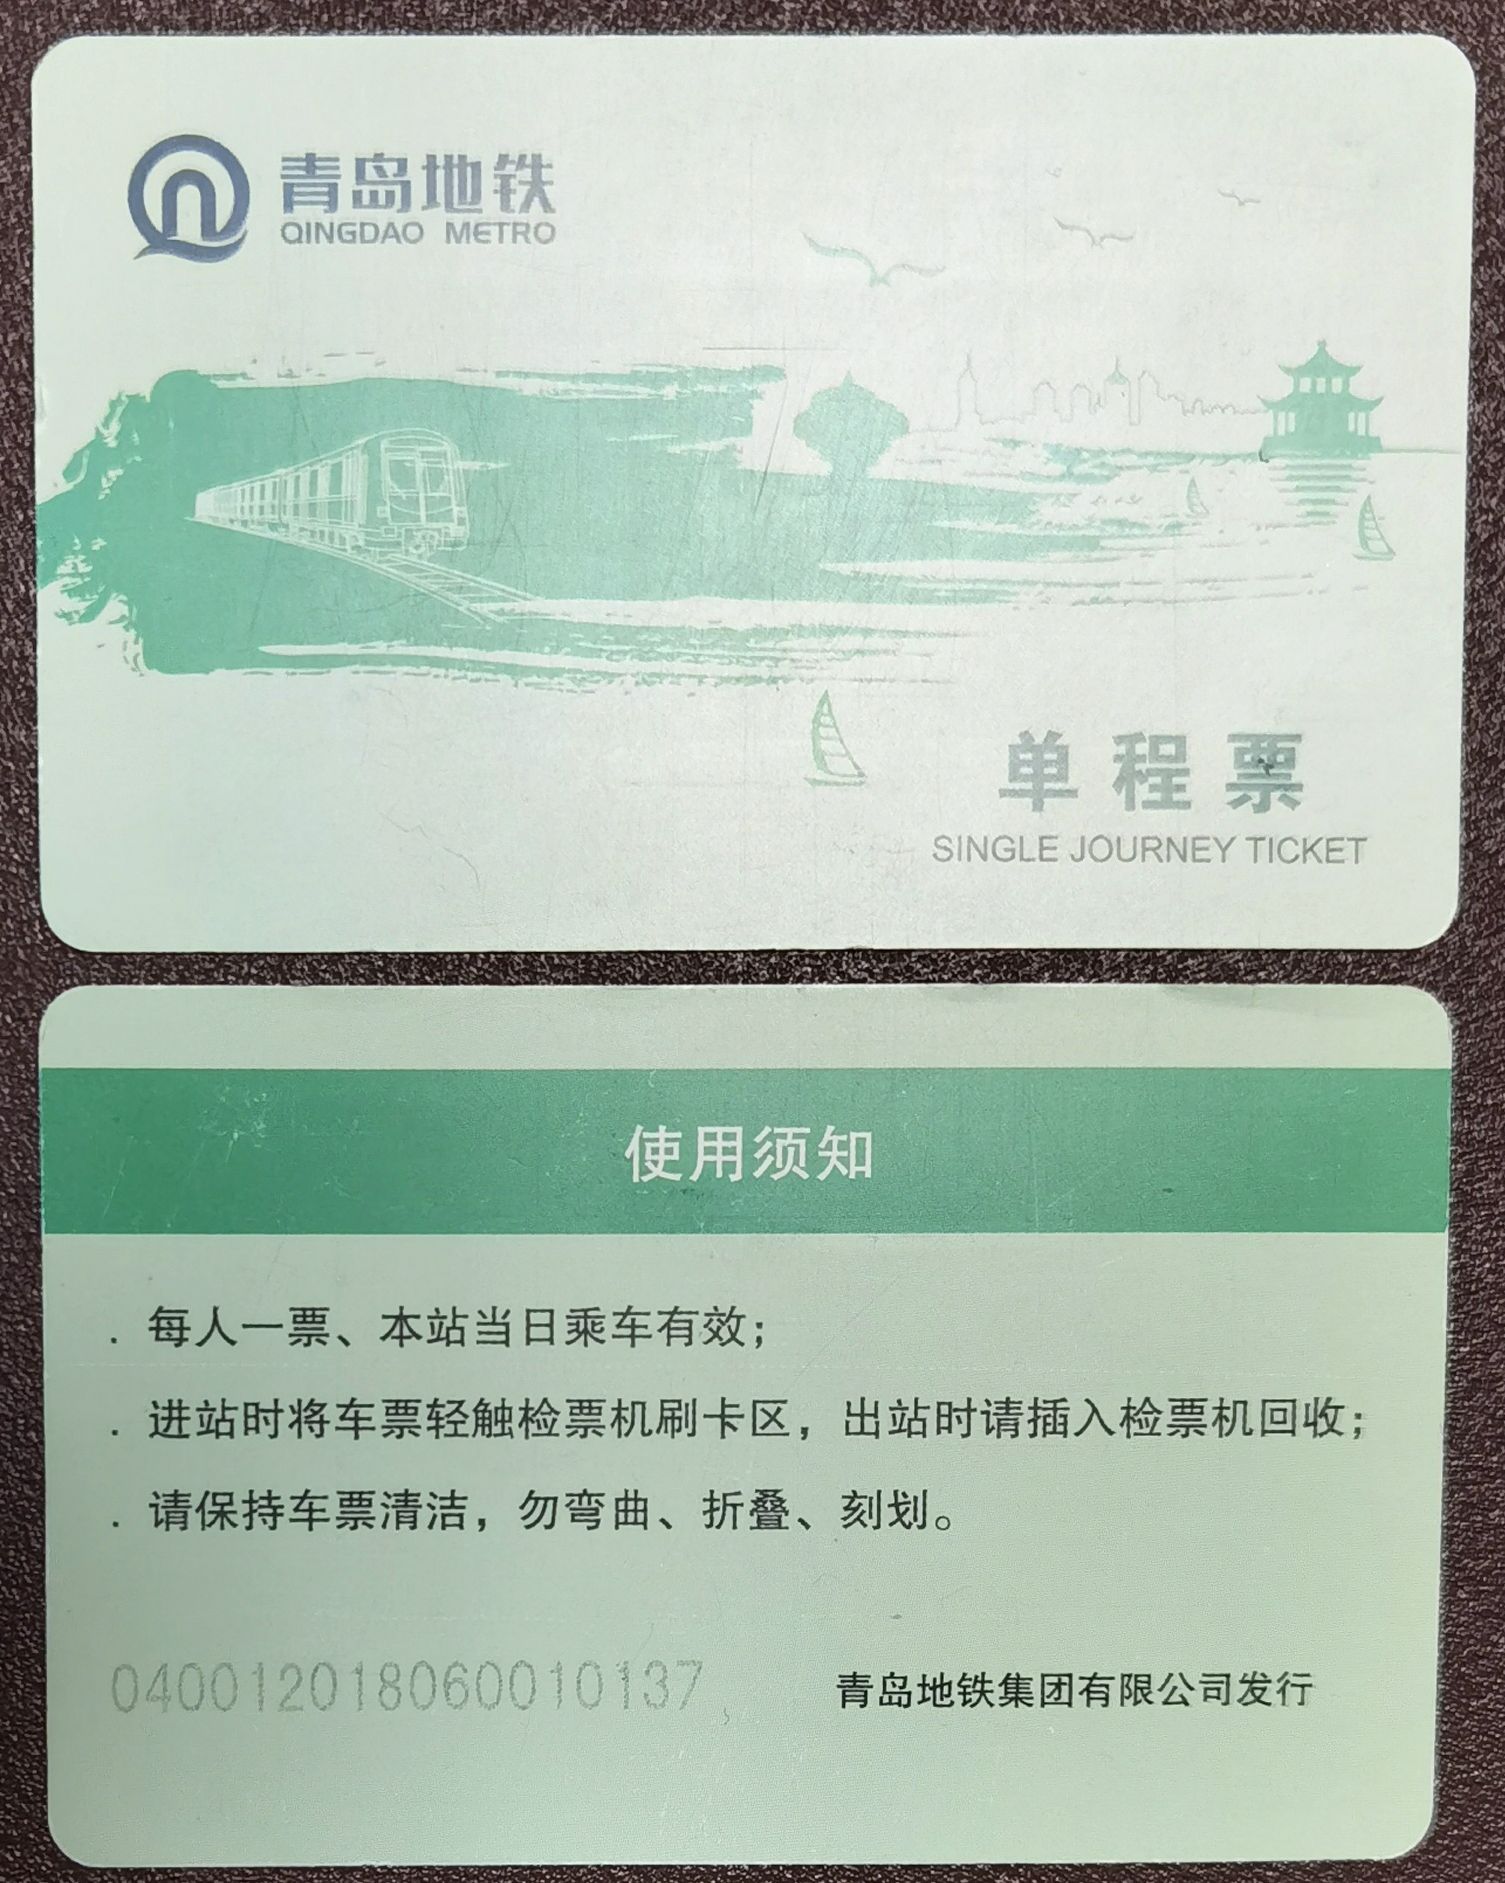 T5272, China Qingdao City, Metro Card (Subway Ticket), One Way 2022, Unvalid